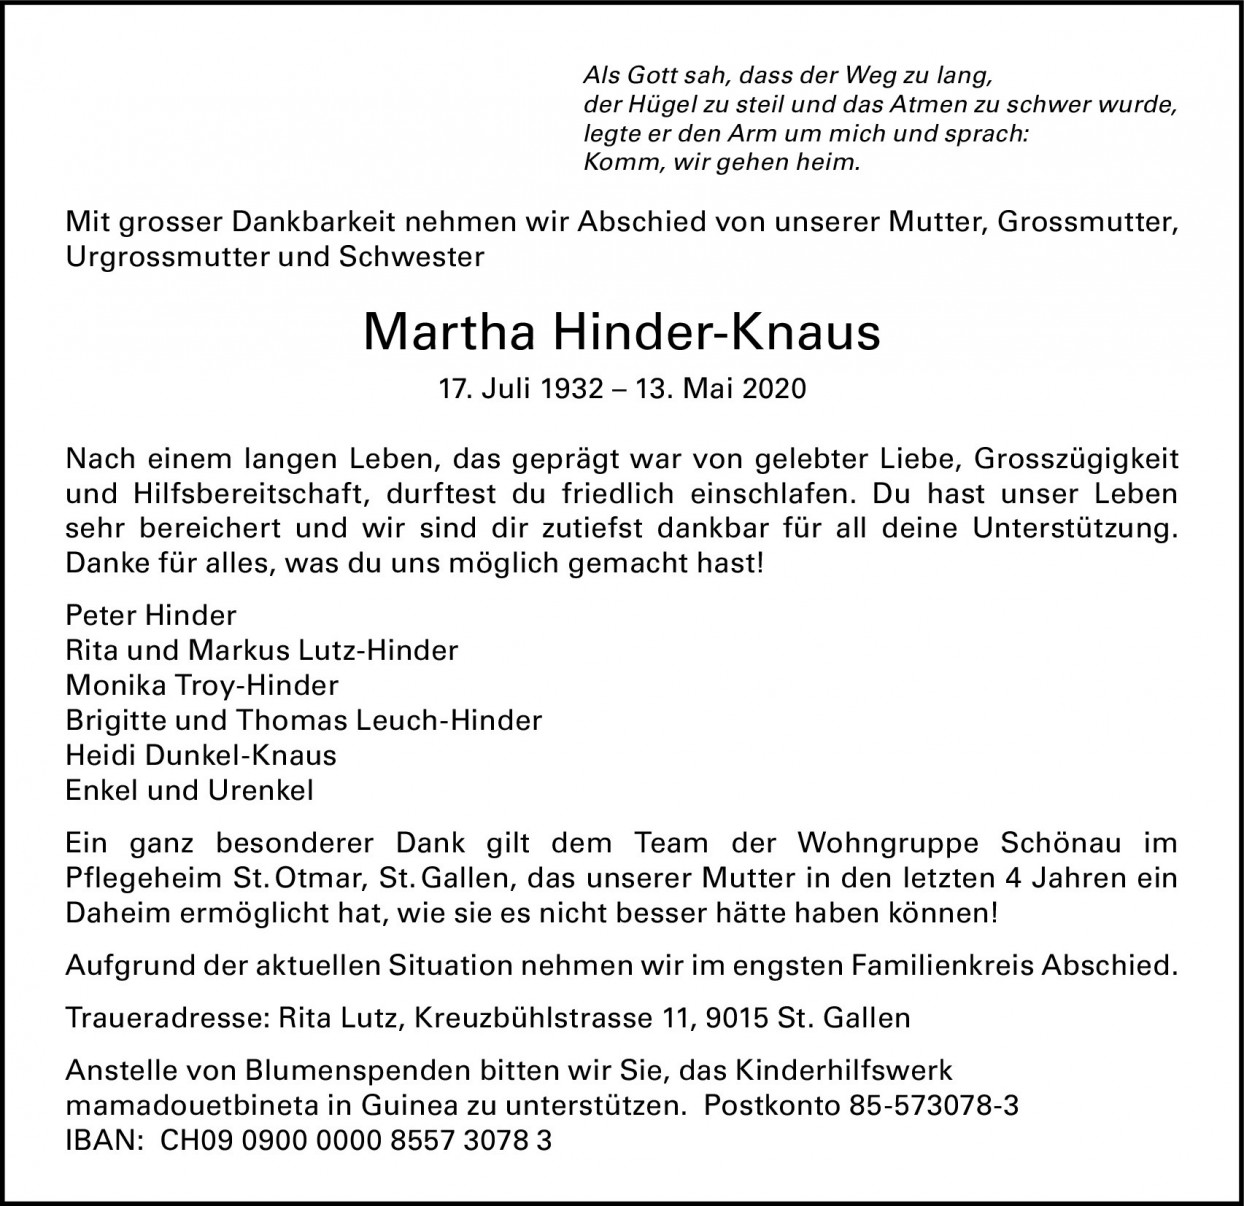 Martha Hinder-Knaus